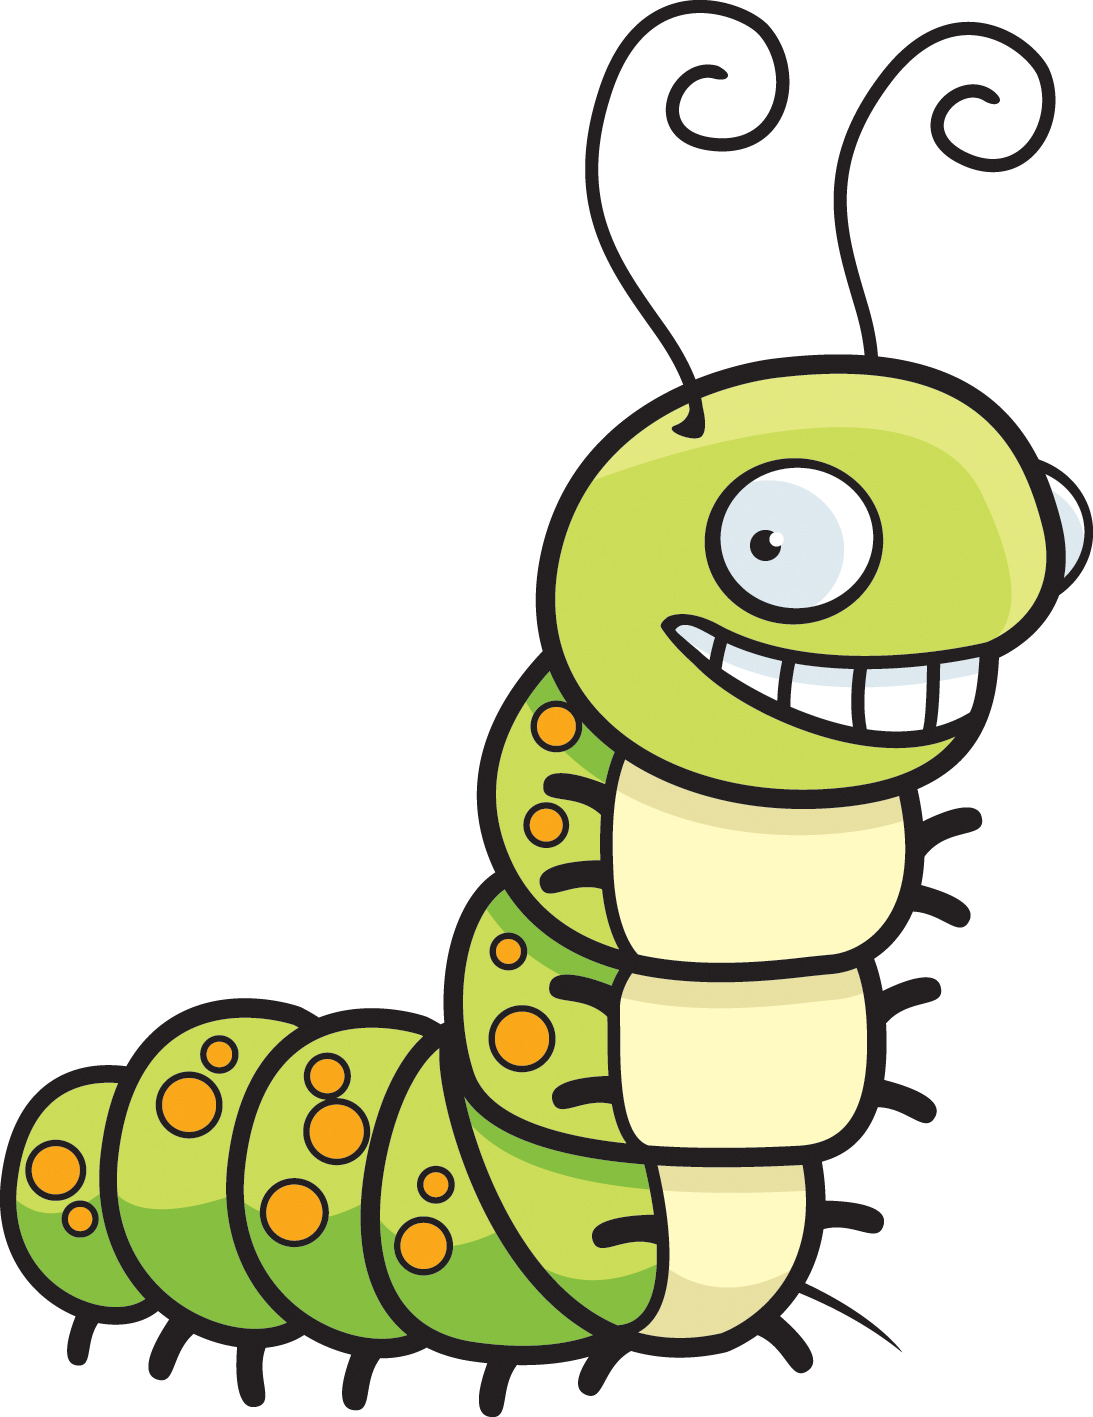 Caterpillar images clip art